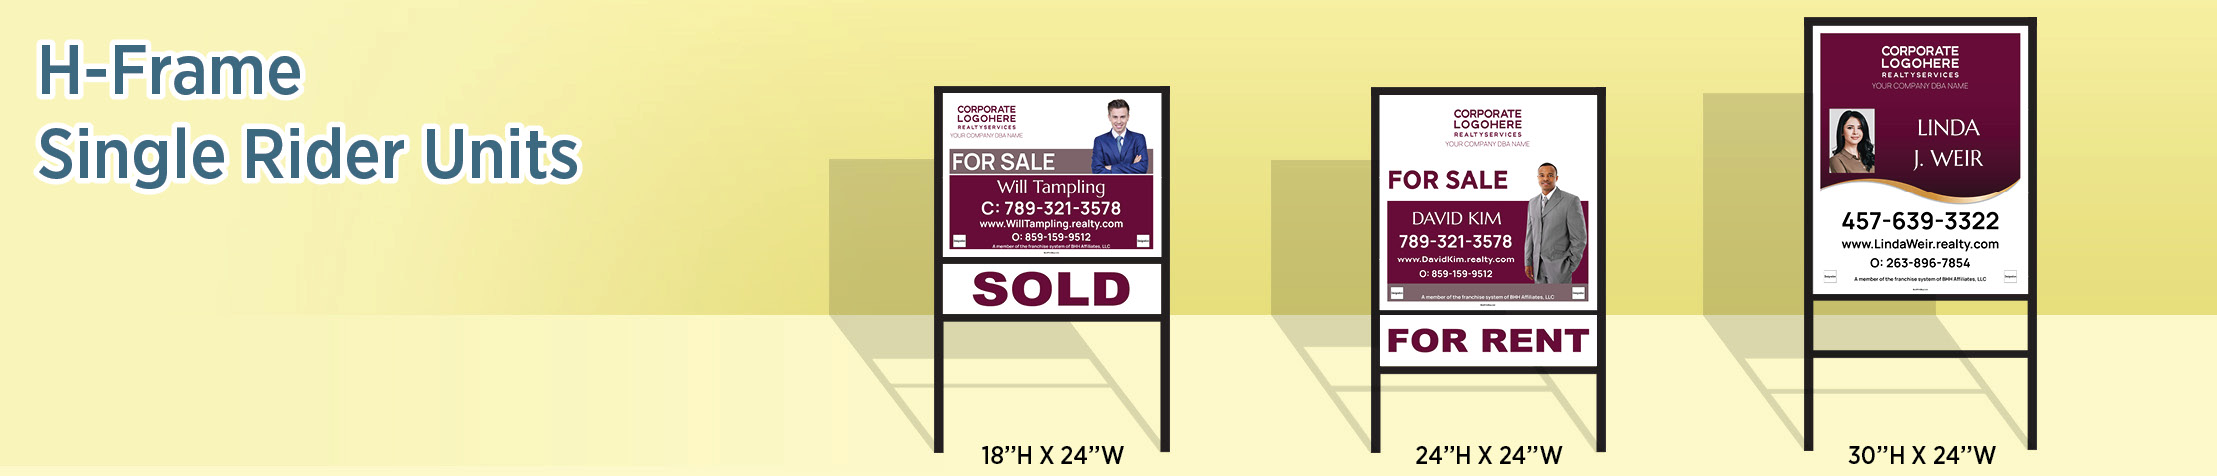 Berkshire Hathaway Real Estate H-Frame Single Rider Units - KW approved vendor real estate signs | BestPrintBuy.com